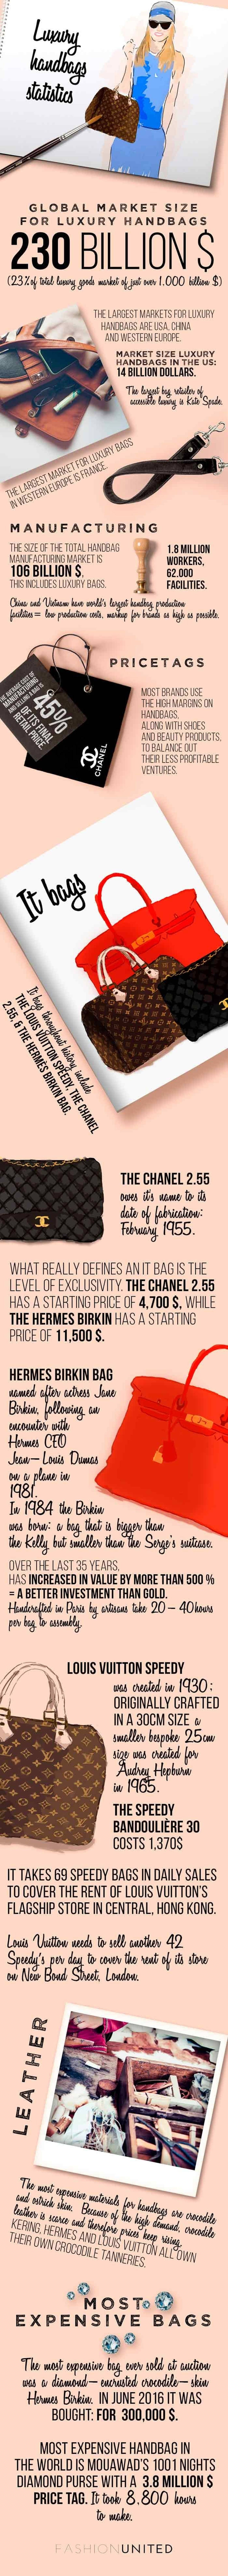 Infographic - Step inside the luxury handbag